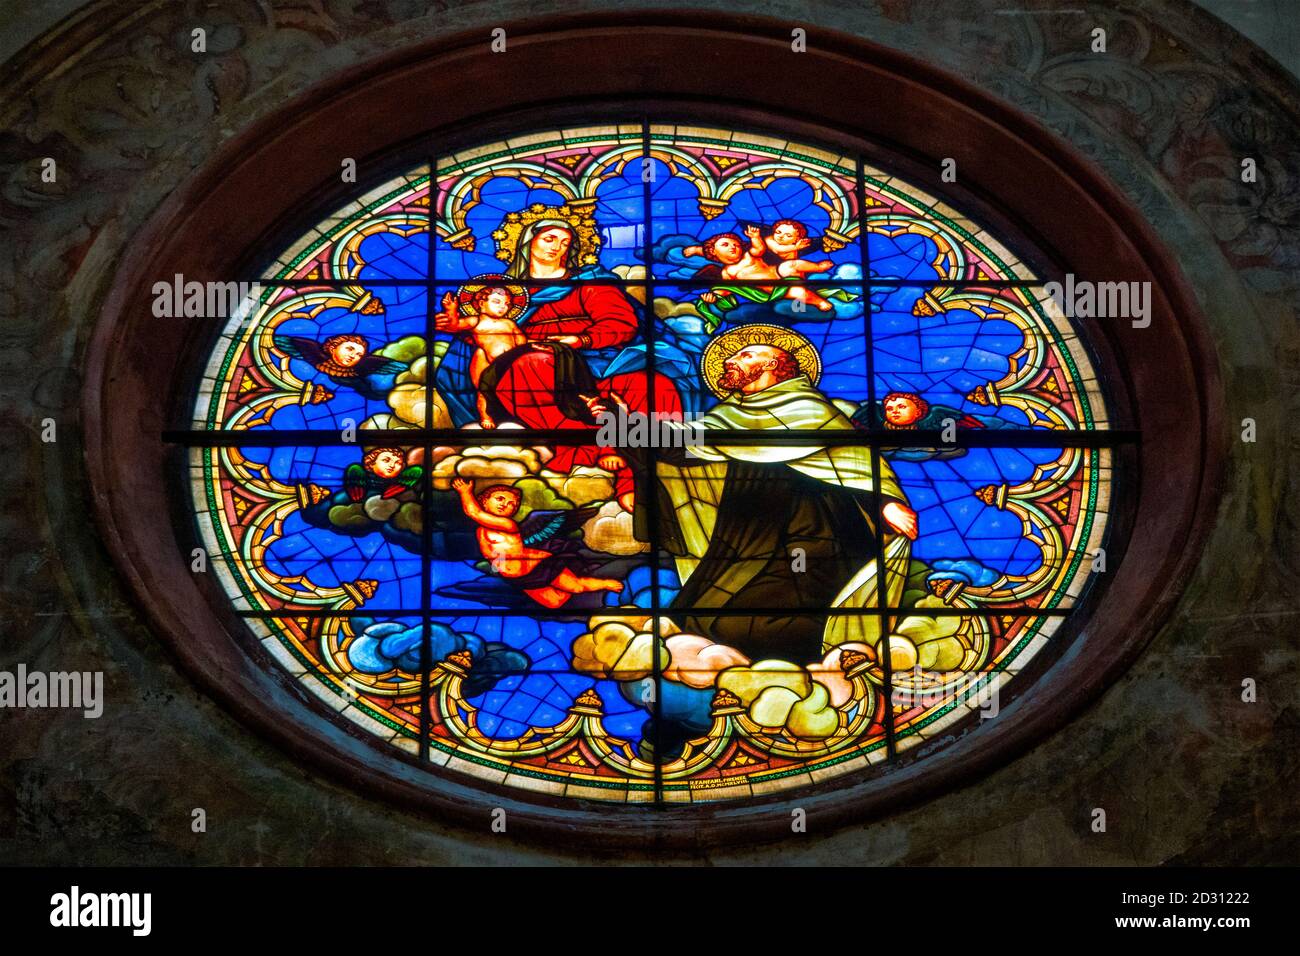 Innenraum des Rosettenfensters in der Kirche San Martino, Bologna, Italien Stockfoto